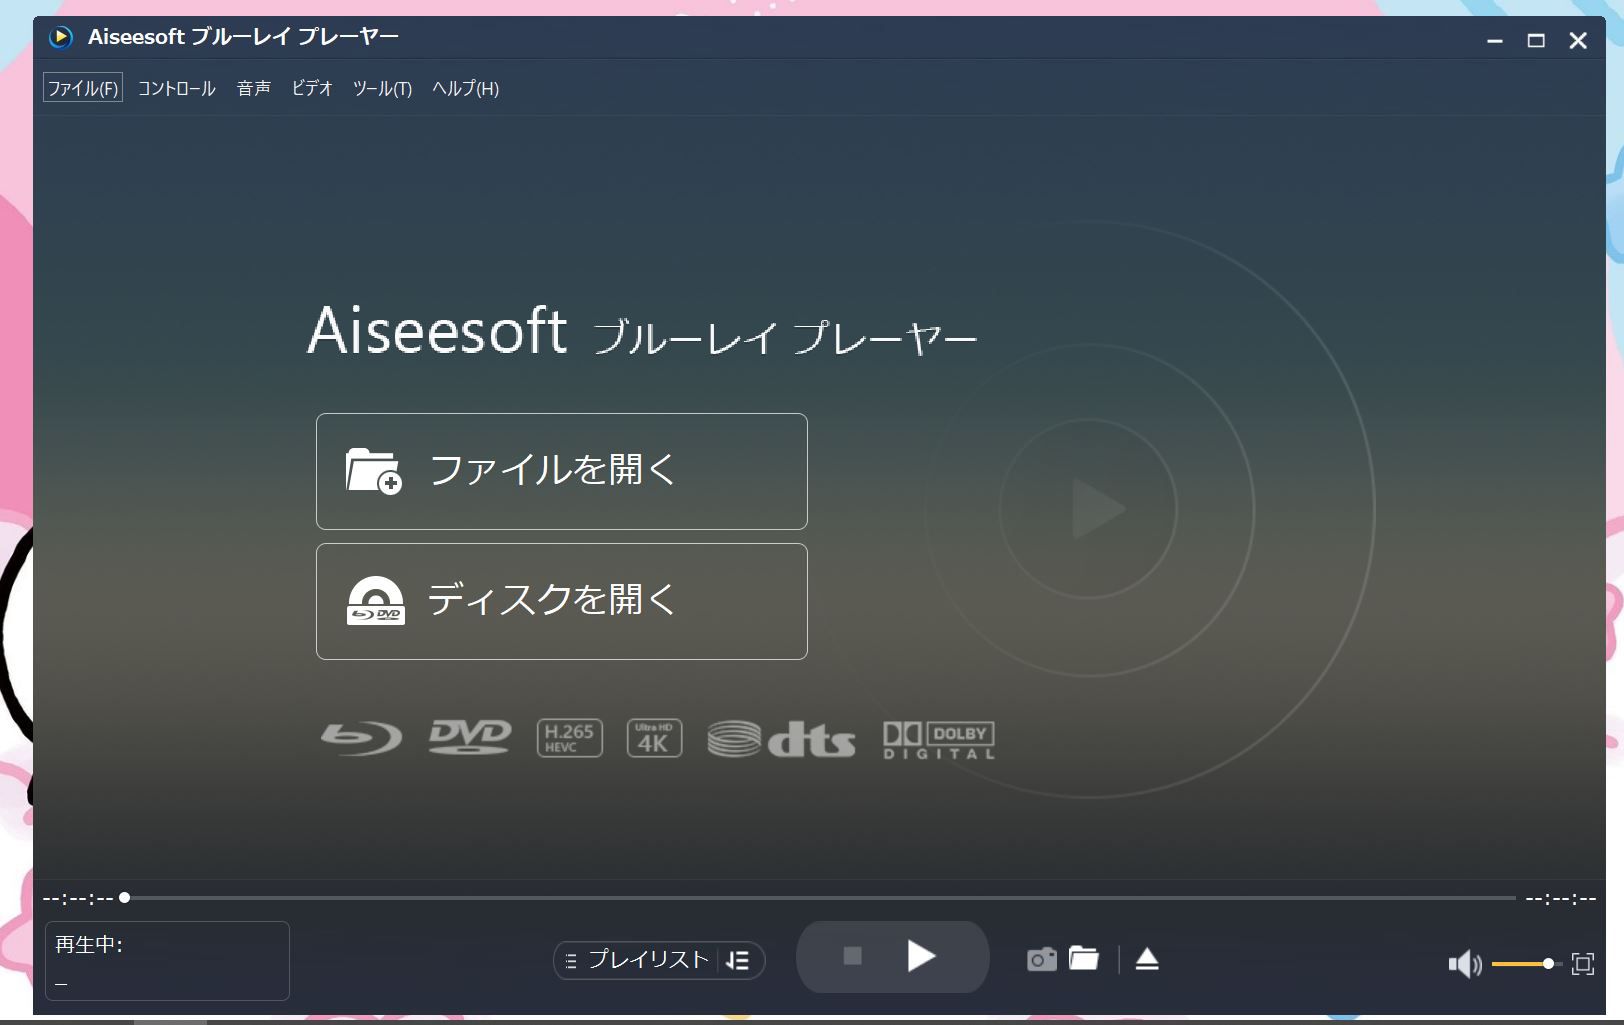 Aiseesoft Blu-ray Playerの起動画面